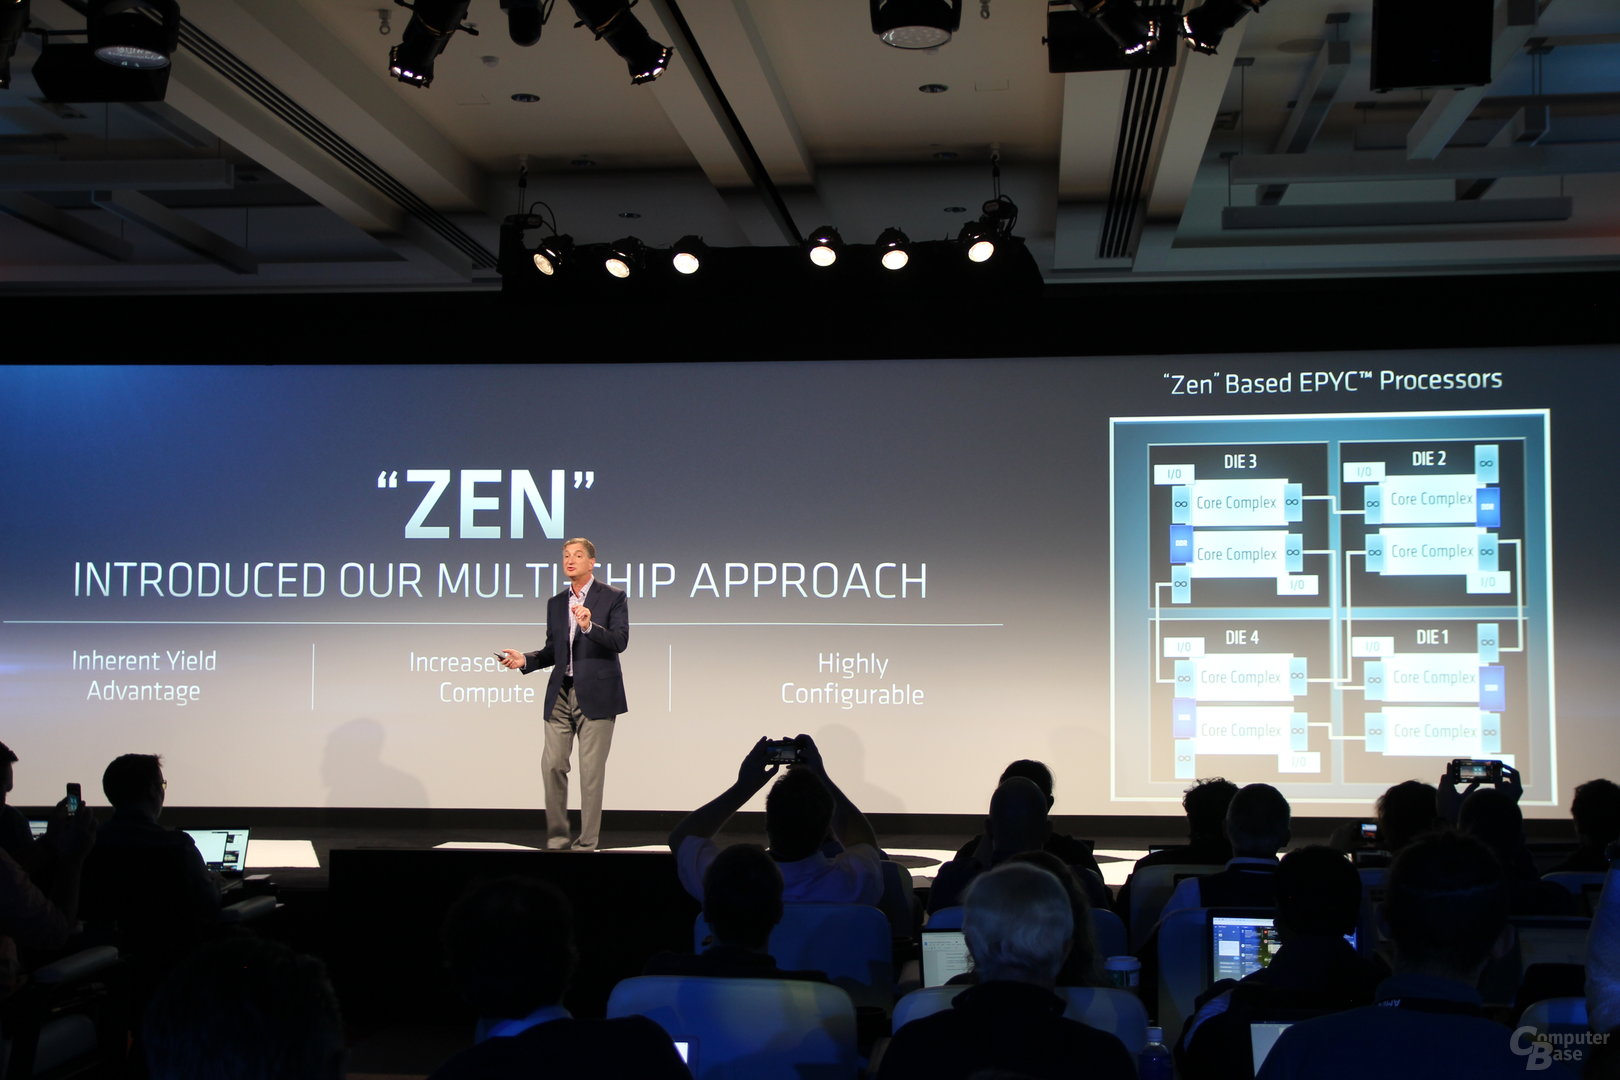 AMD Zen 2